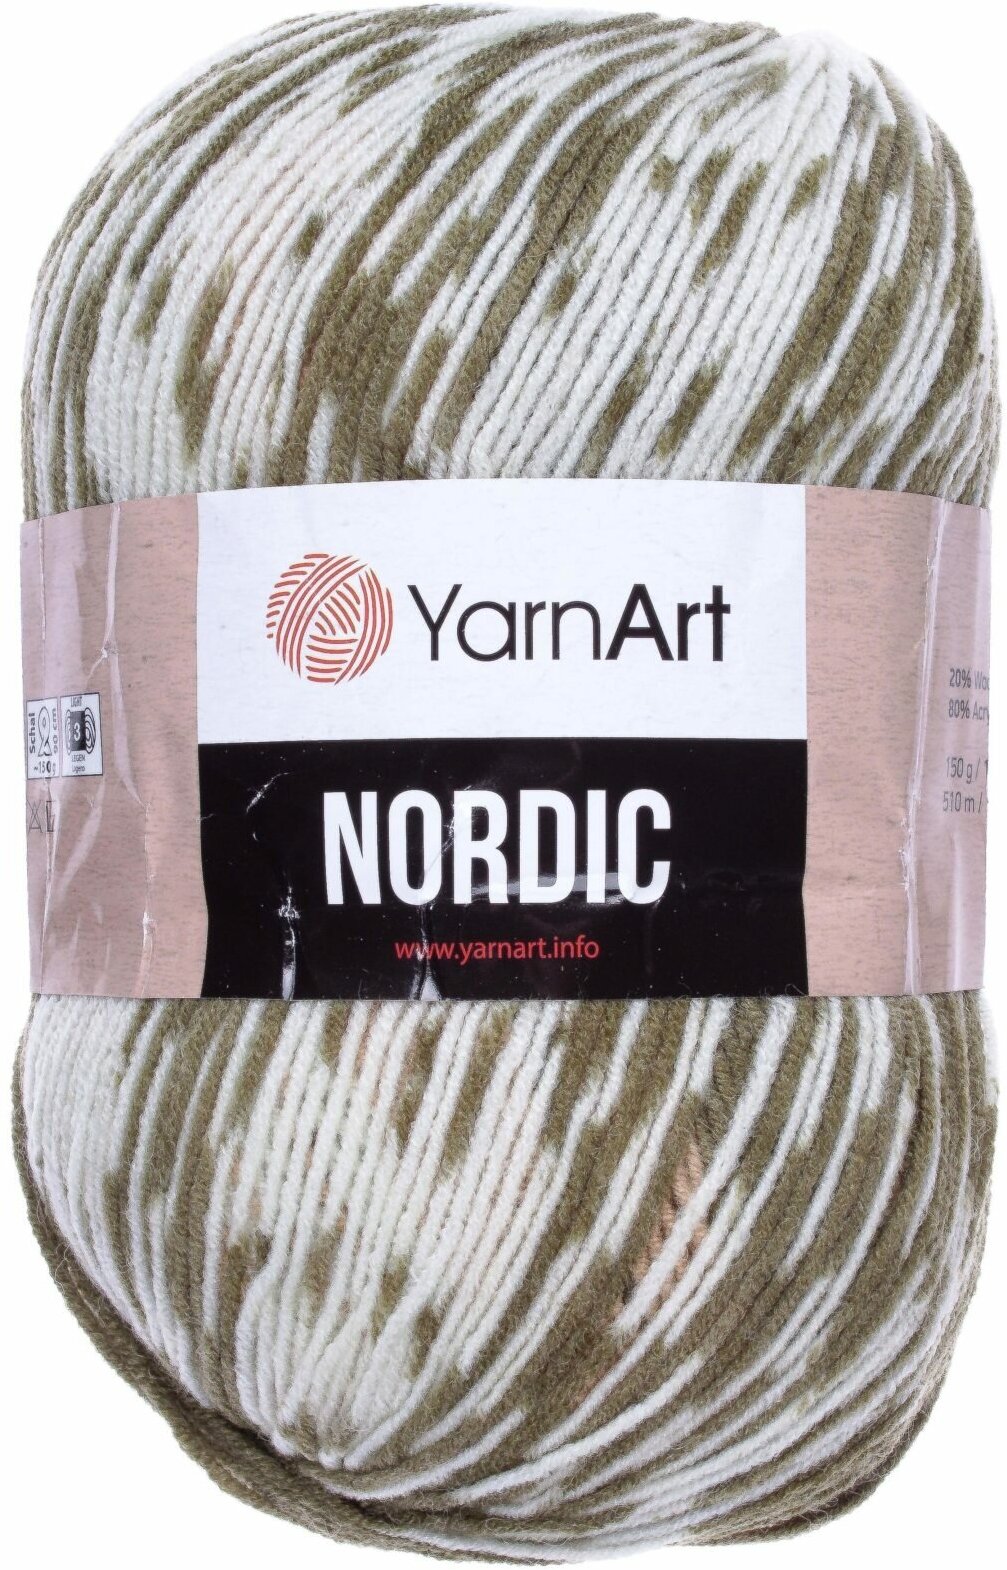  Yarnart Nordic -- (651), 20%/80%, 510, 150, 1